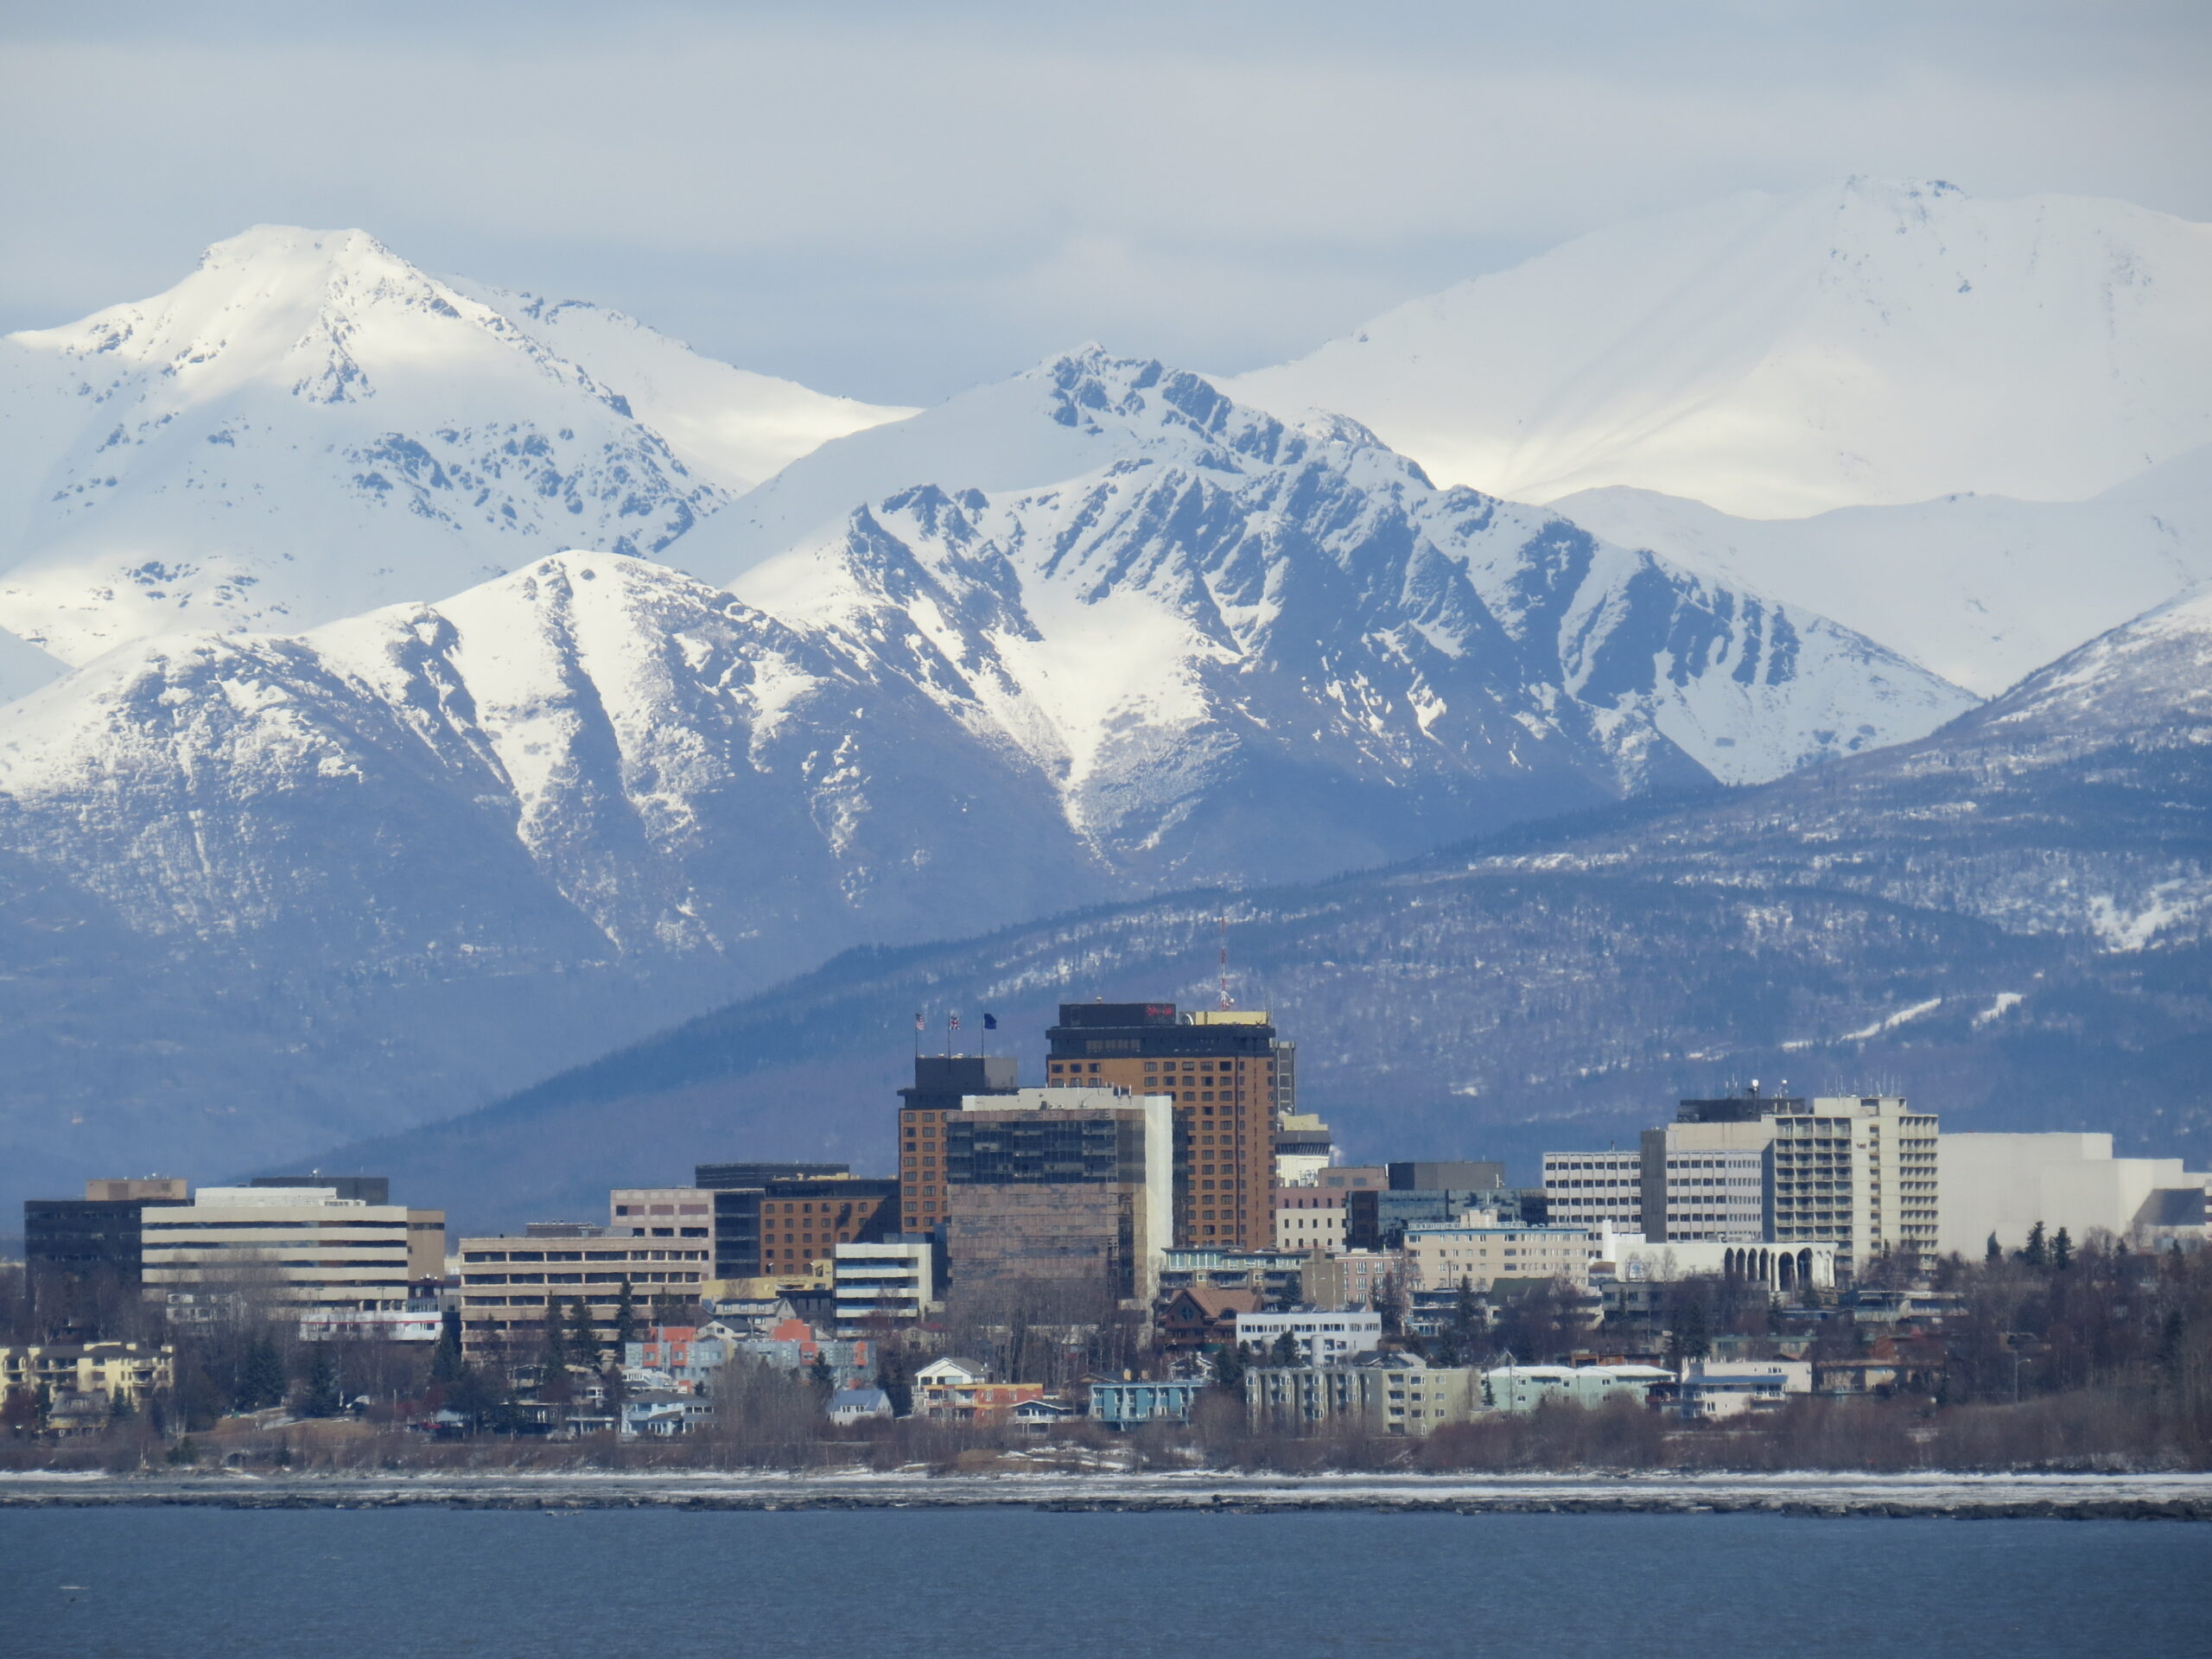 City of Anchorage, Alaska